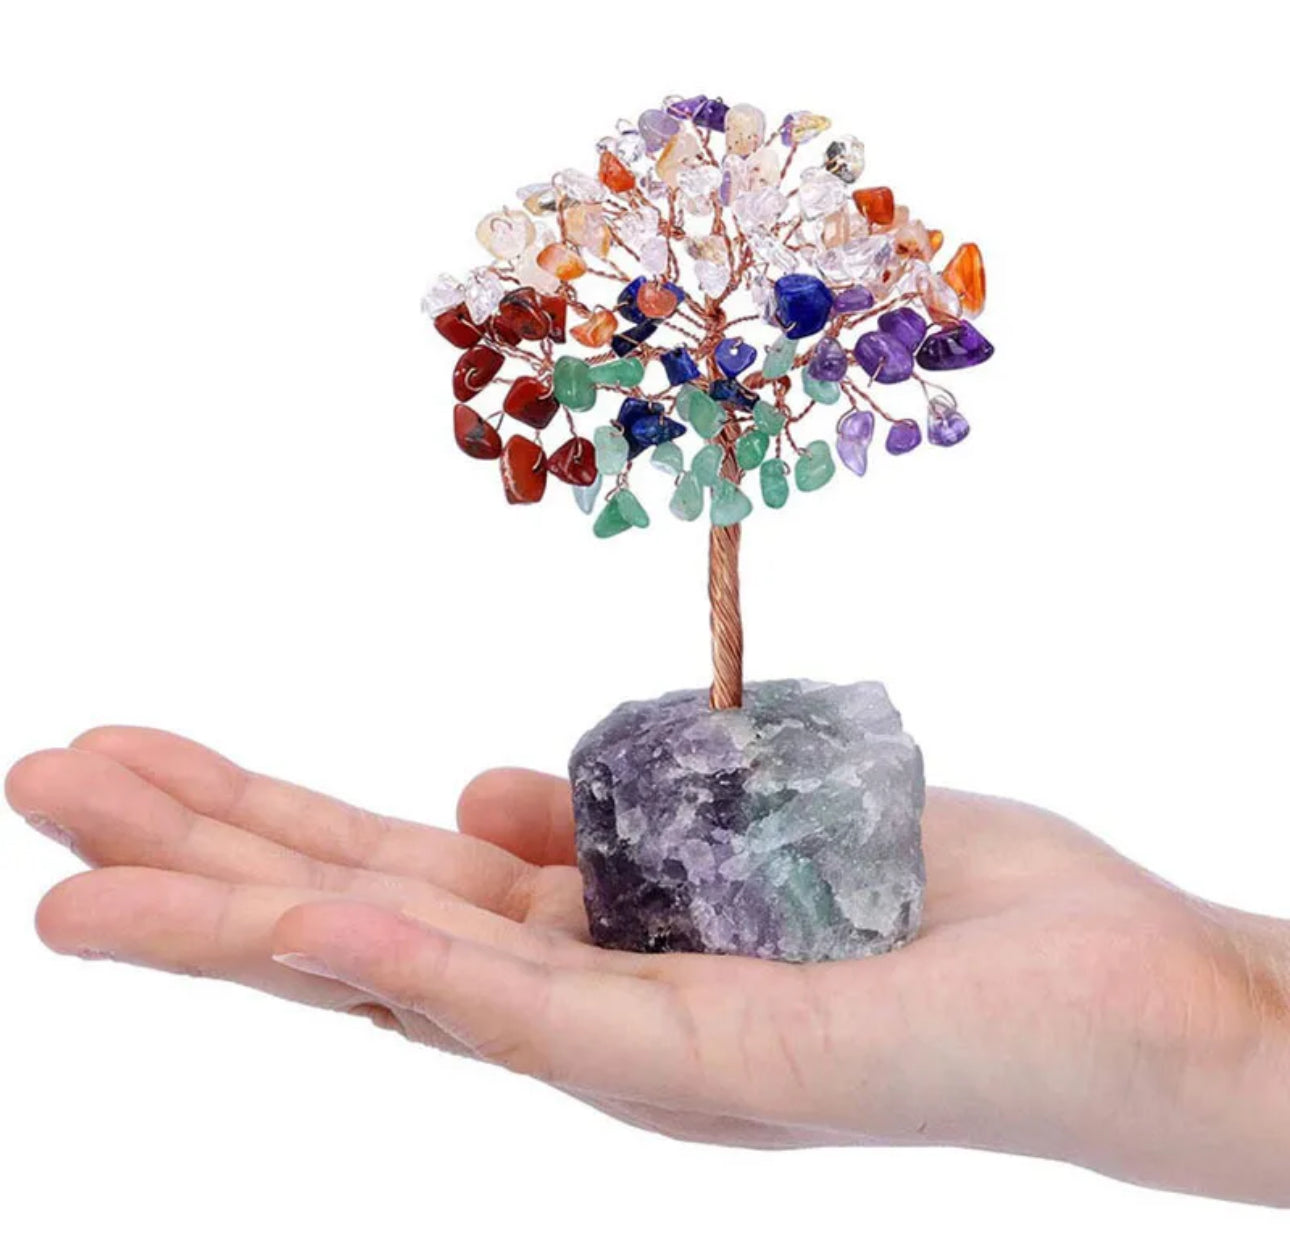 Reiki Crystal Tree Ornament